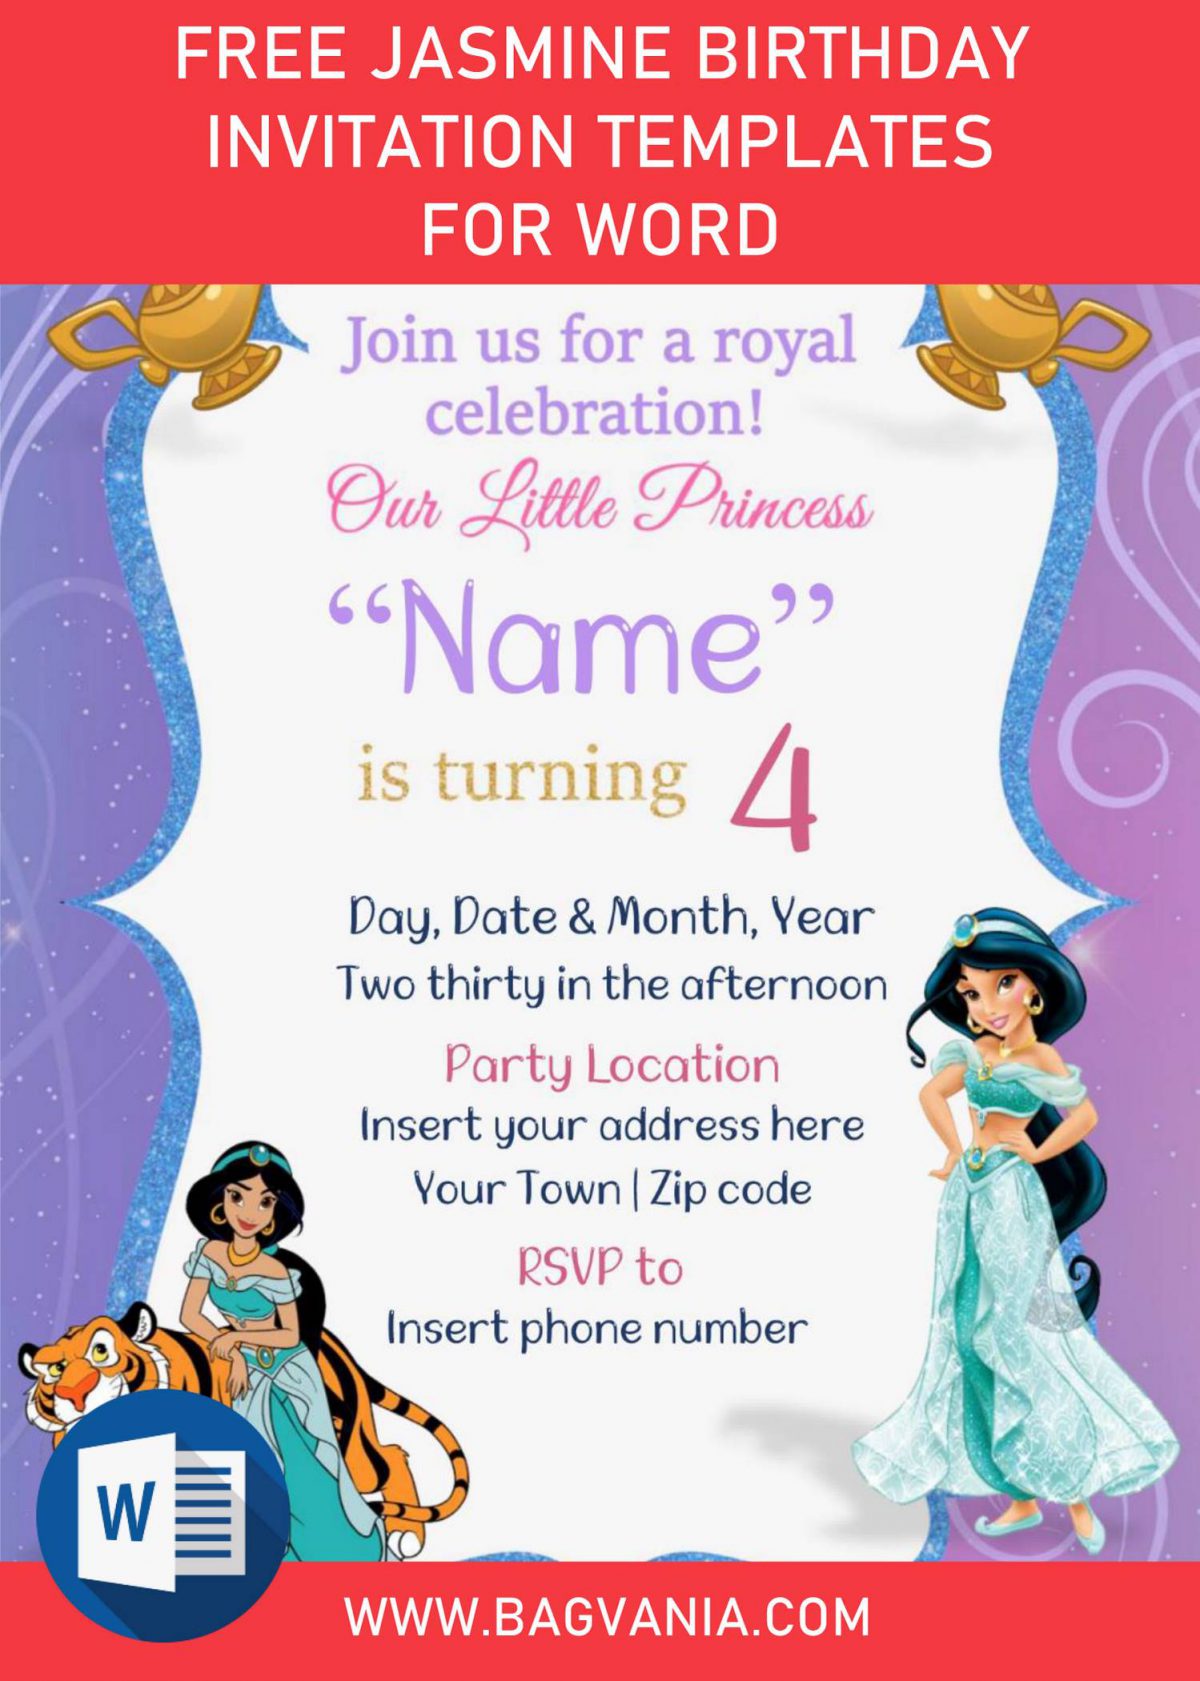 Free Jasmine Birthday Invitation Templates For Word